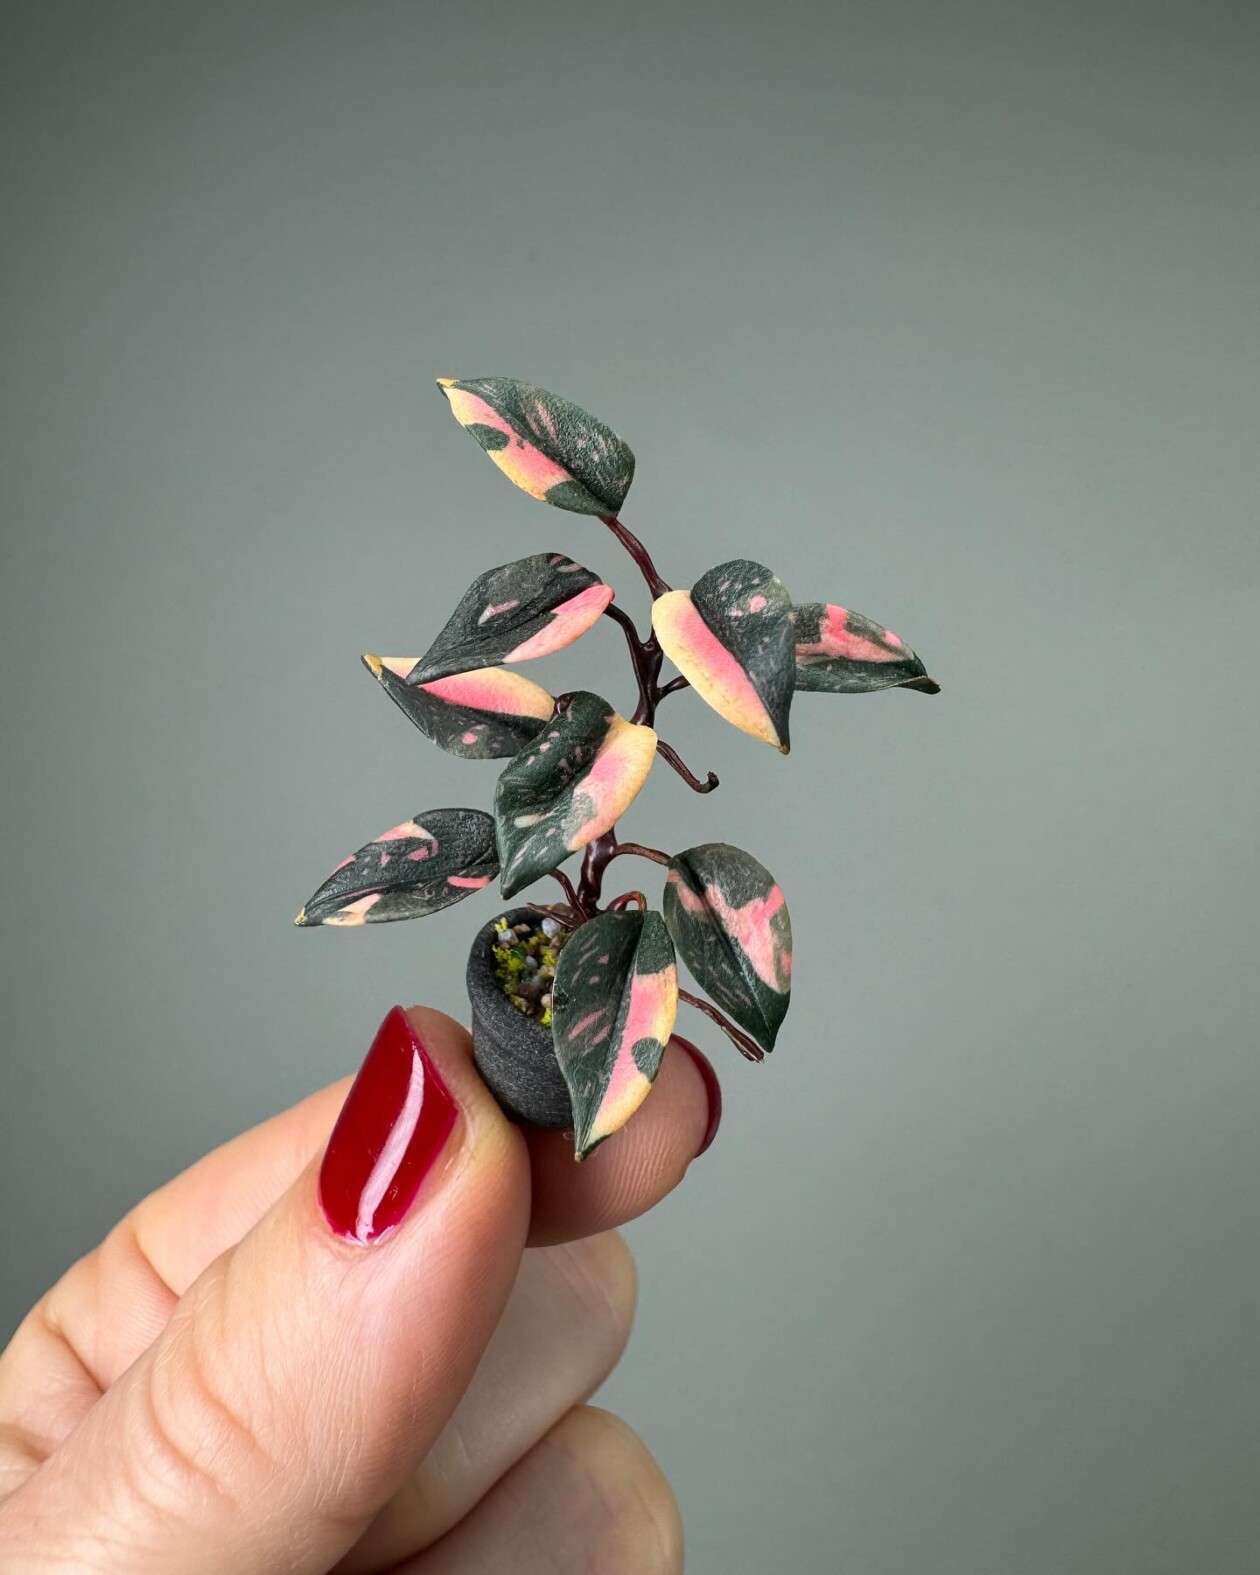 Handmade Miniature Polymer Clay Plants By Astrid Wilk (13)